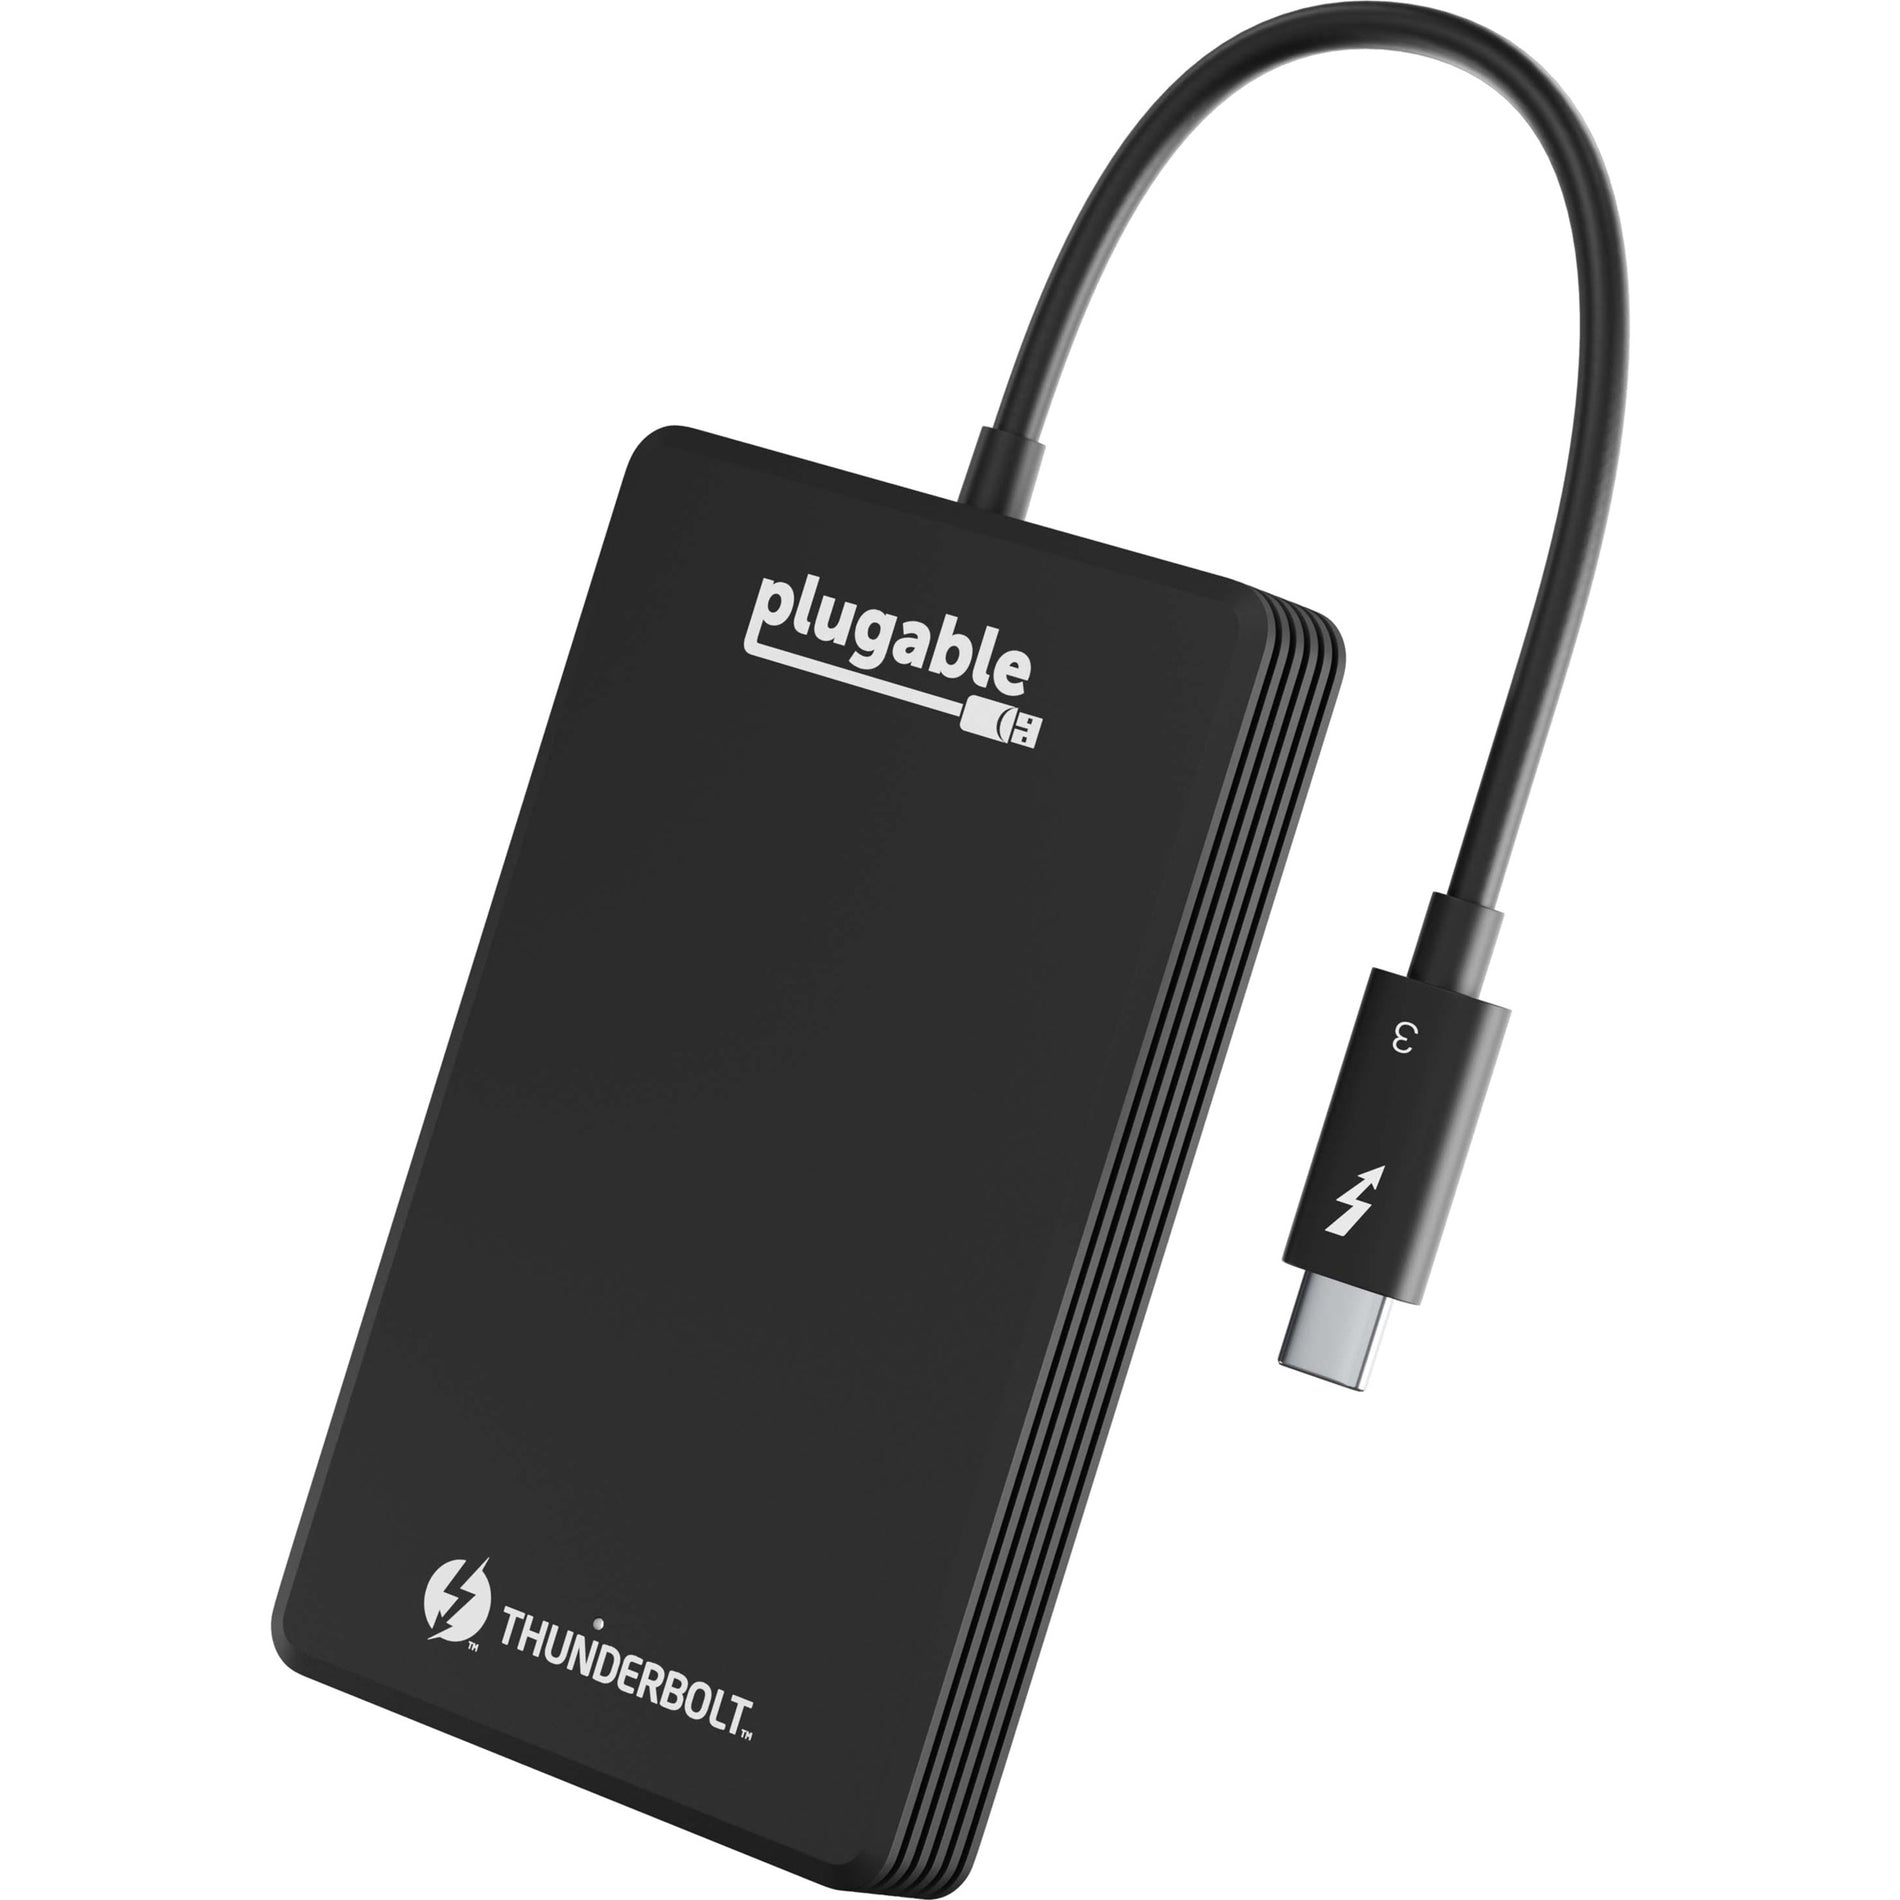 Plugable 2TB Thunderbolt 3 External SSD NVMe Drive [Discontinued]